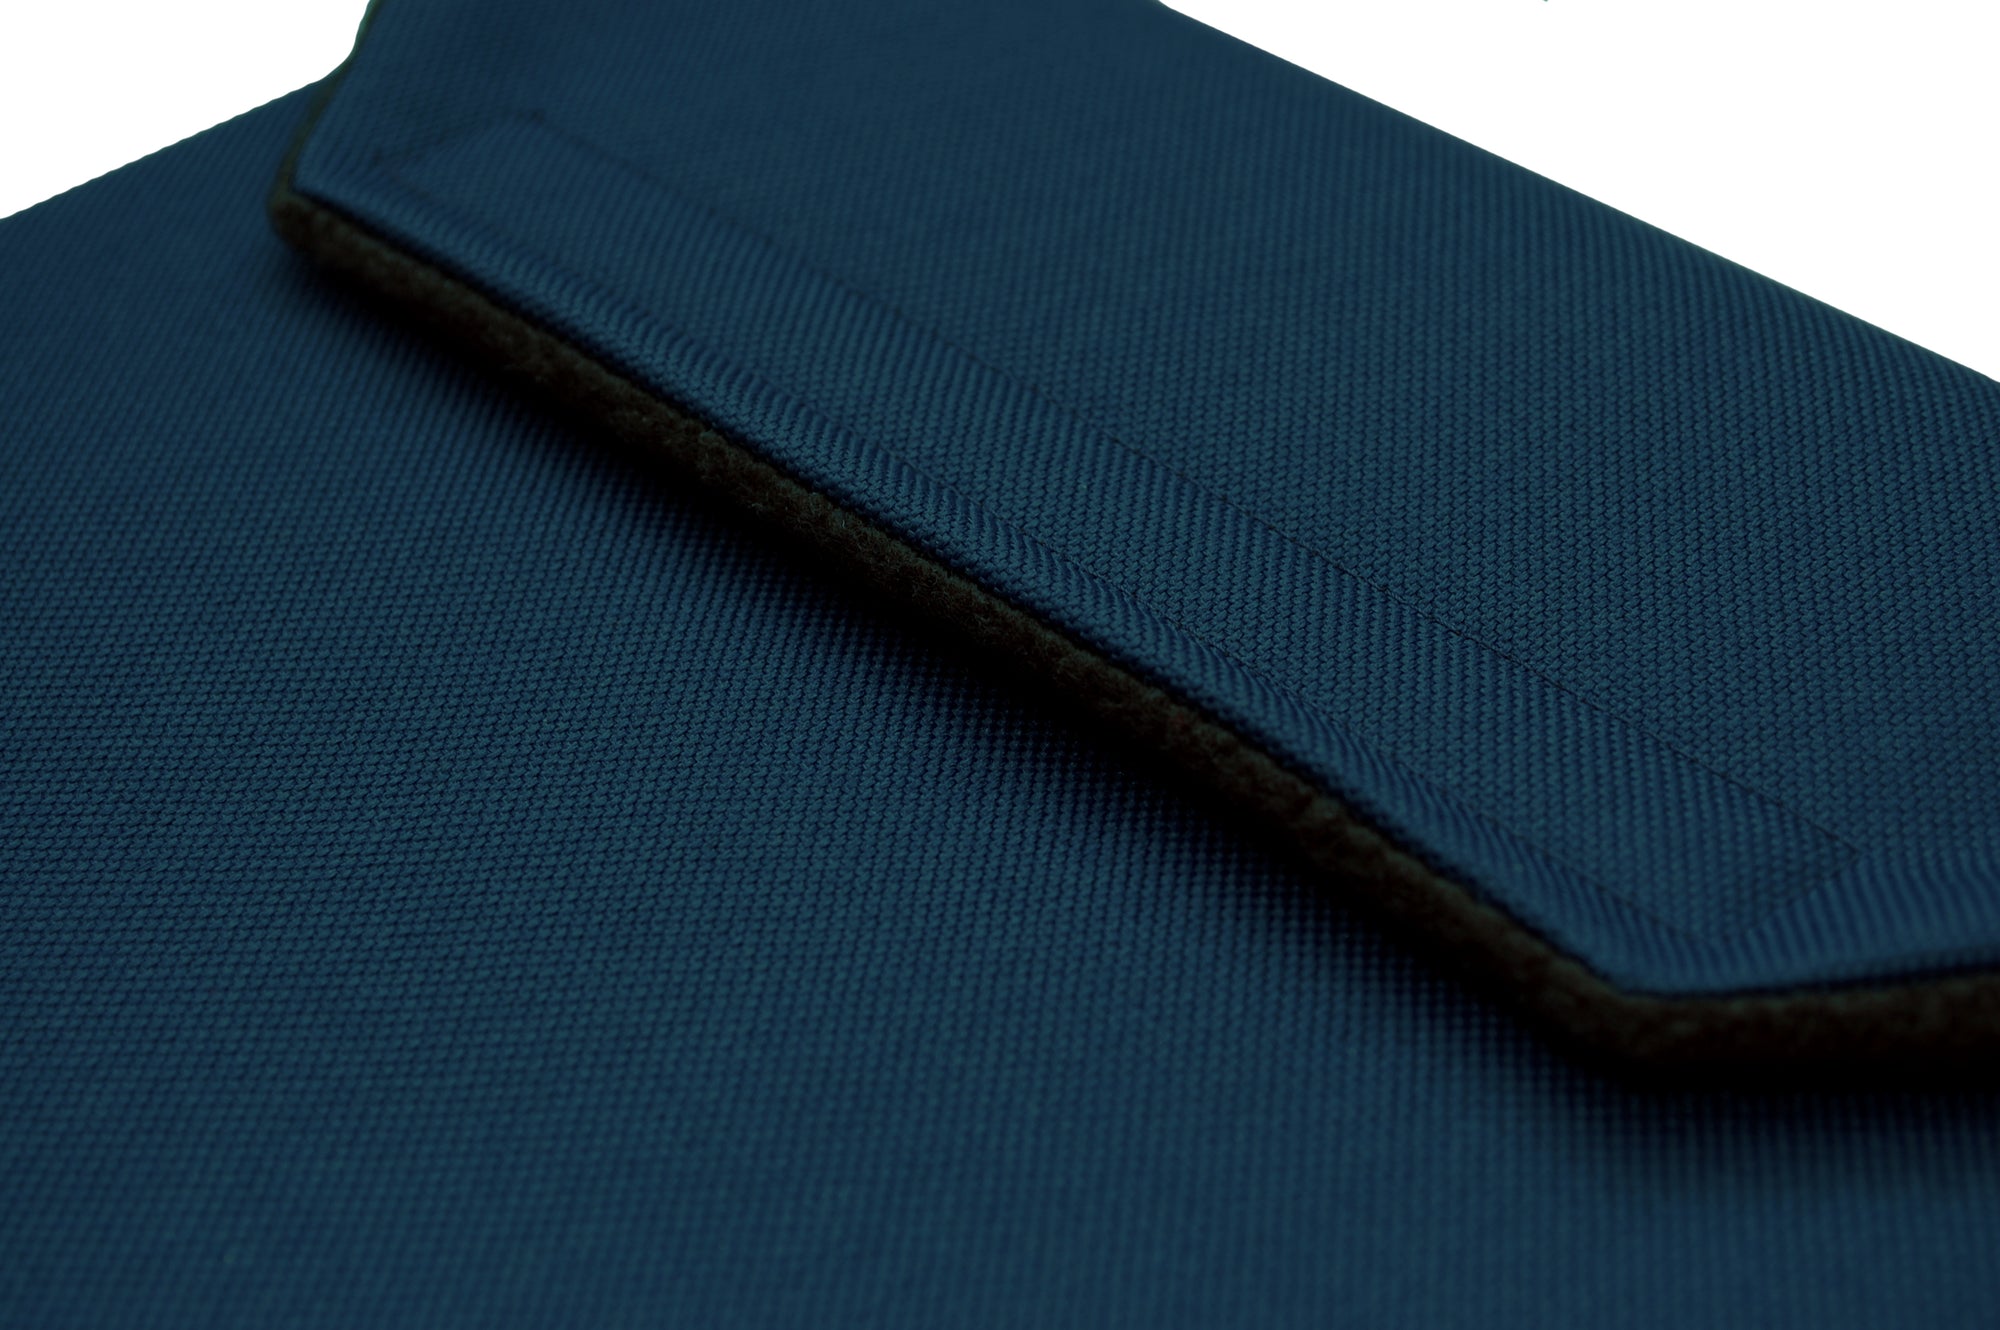 Apple iPad Pro 12.9-inch Sleeve Case - Everyday Canvas